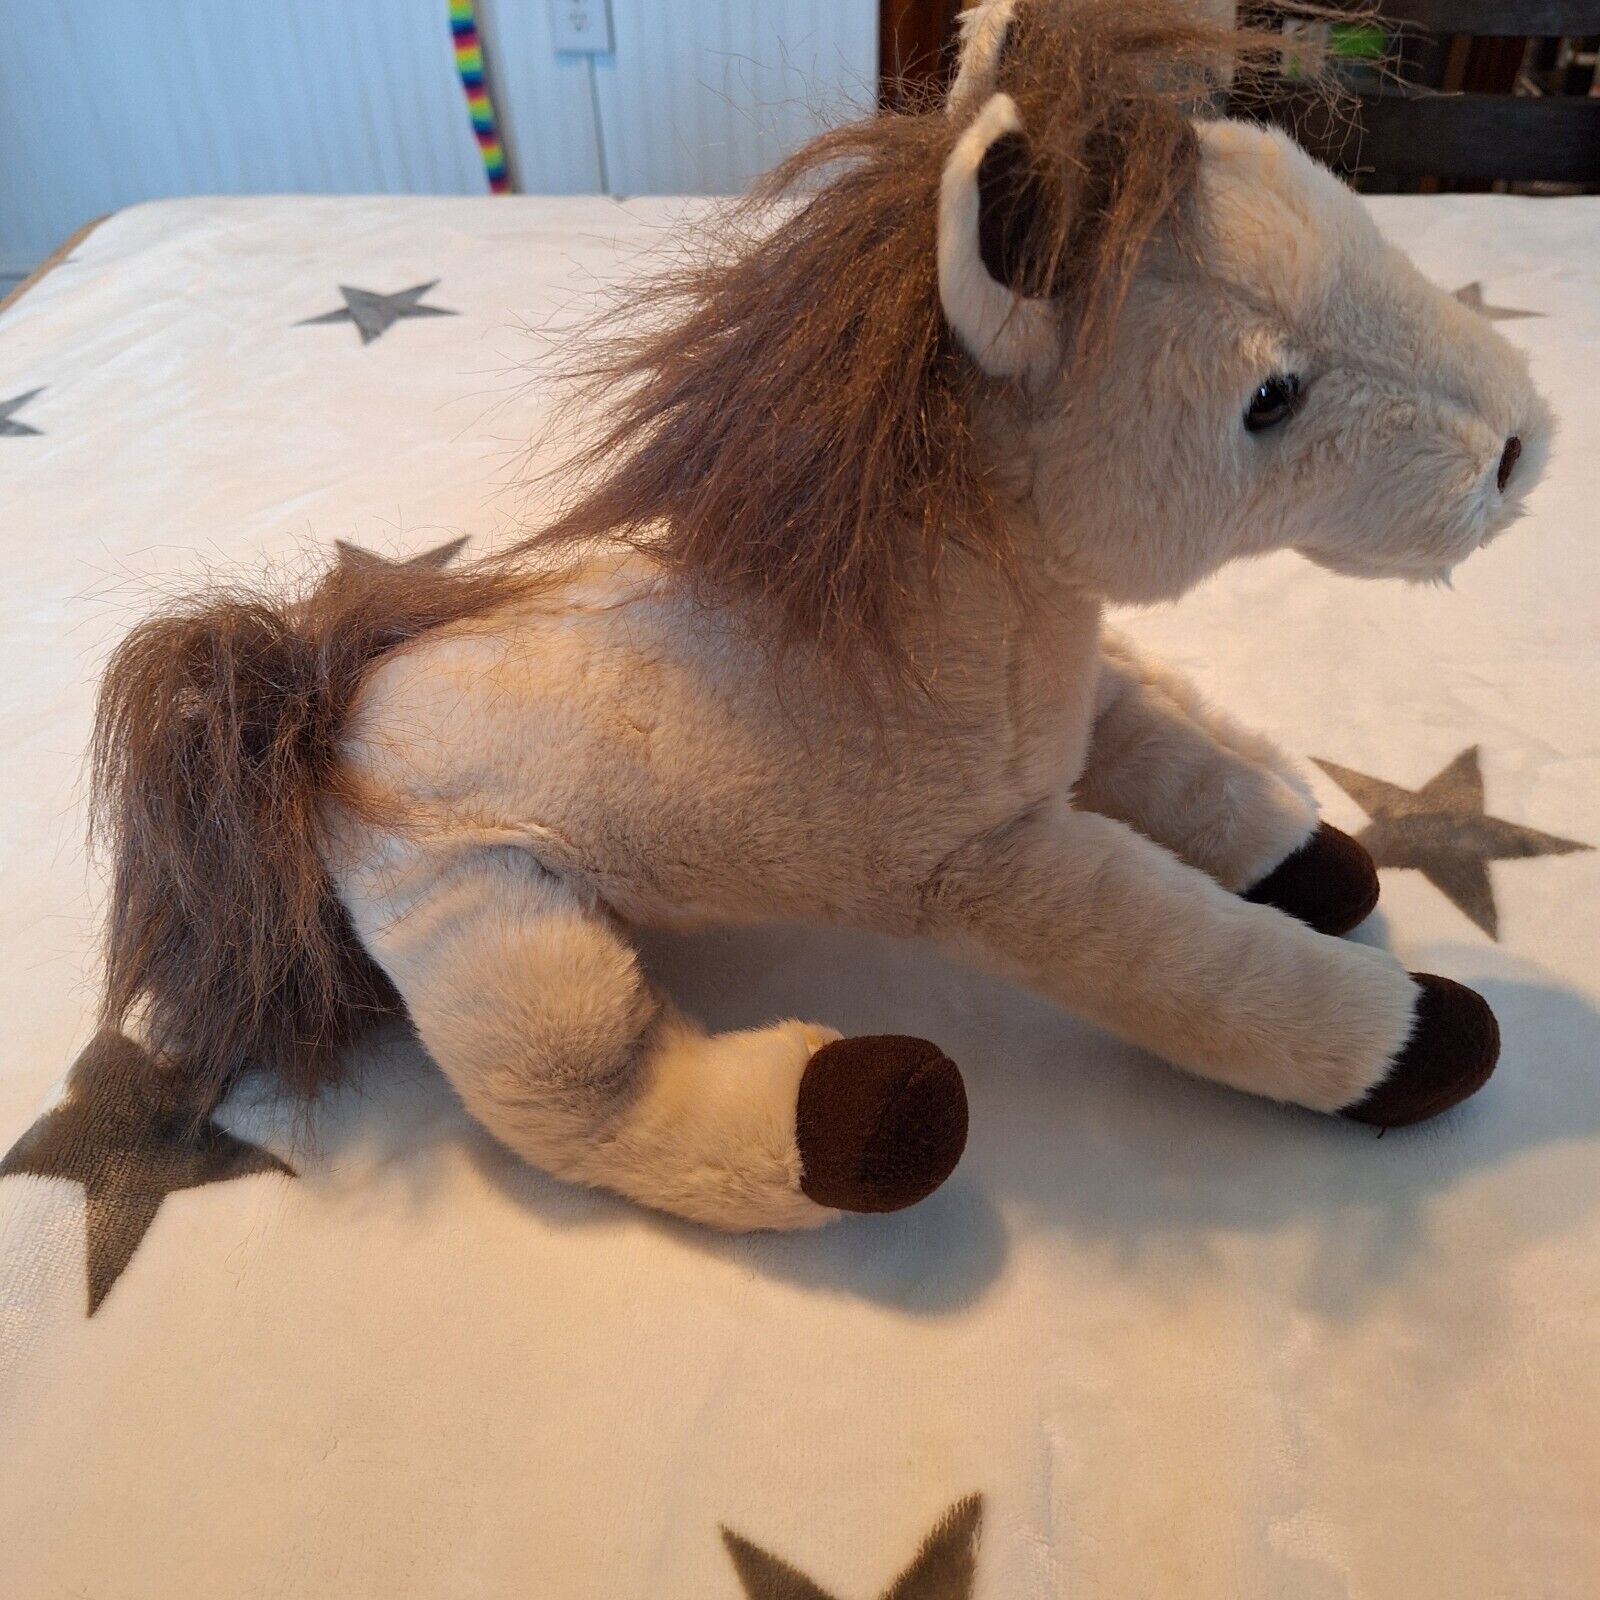 No Clothes Wells Fargo Pony HUNTER Legendary Horse 2018 Plush Stuffed Animal NWT